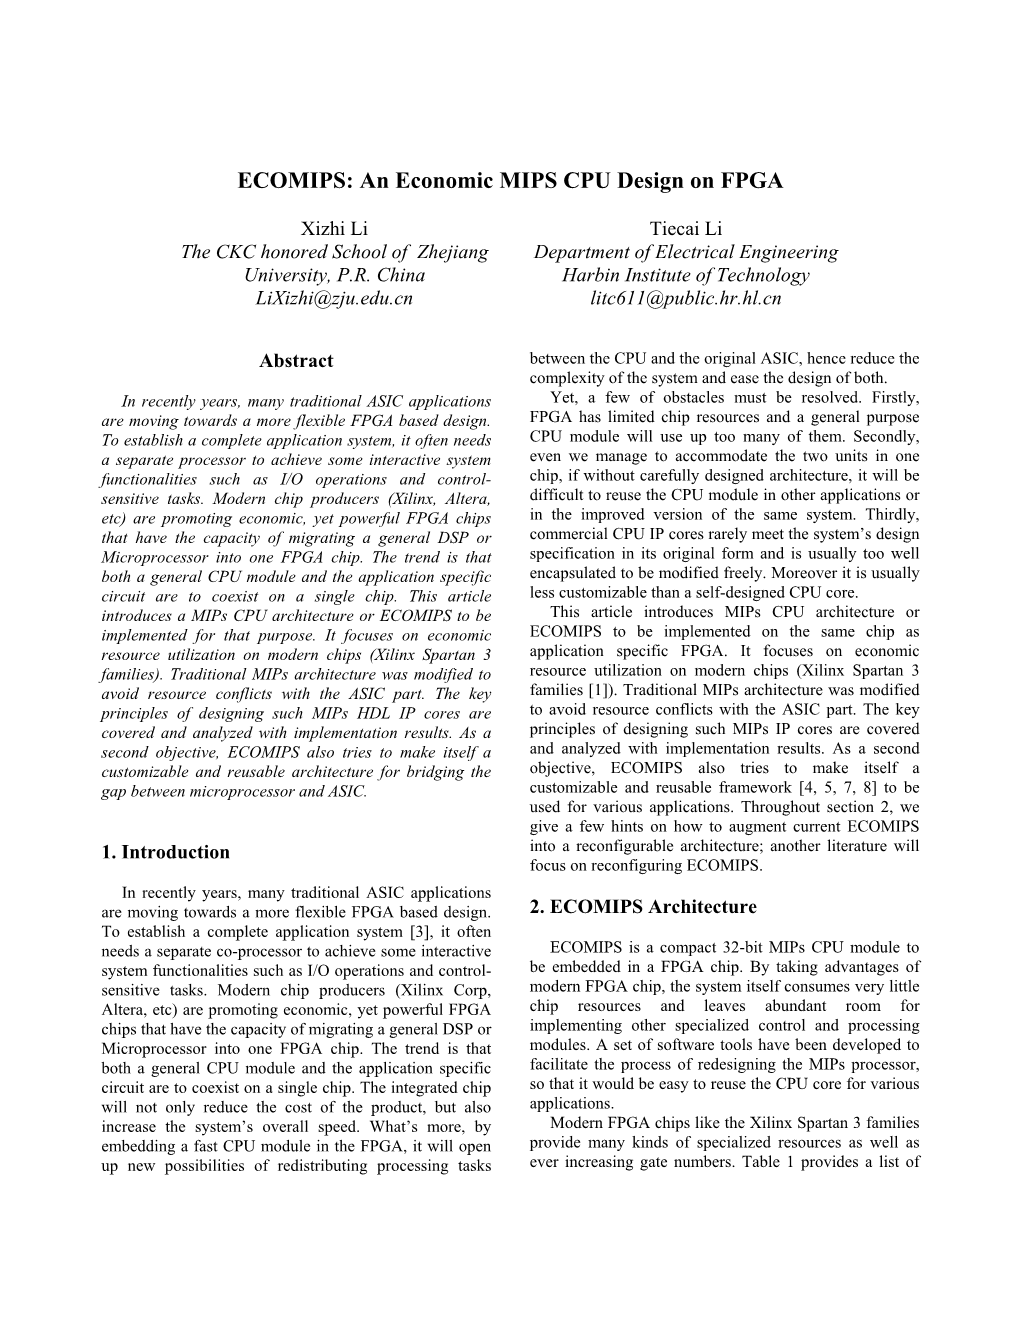 ECOMIPS: an Economic MIPS CPU Design on FPGA